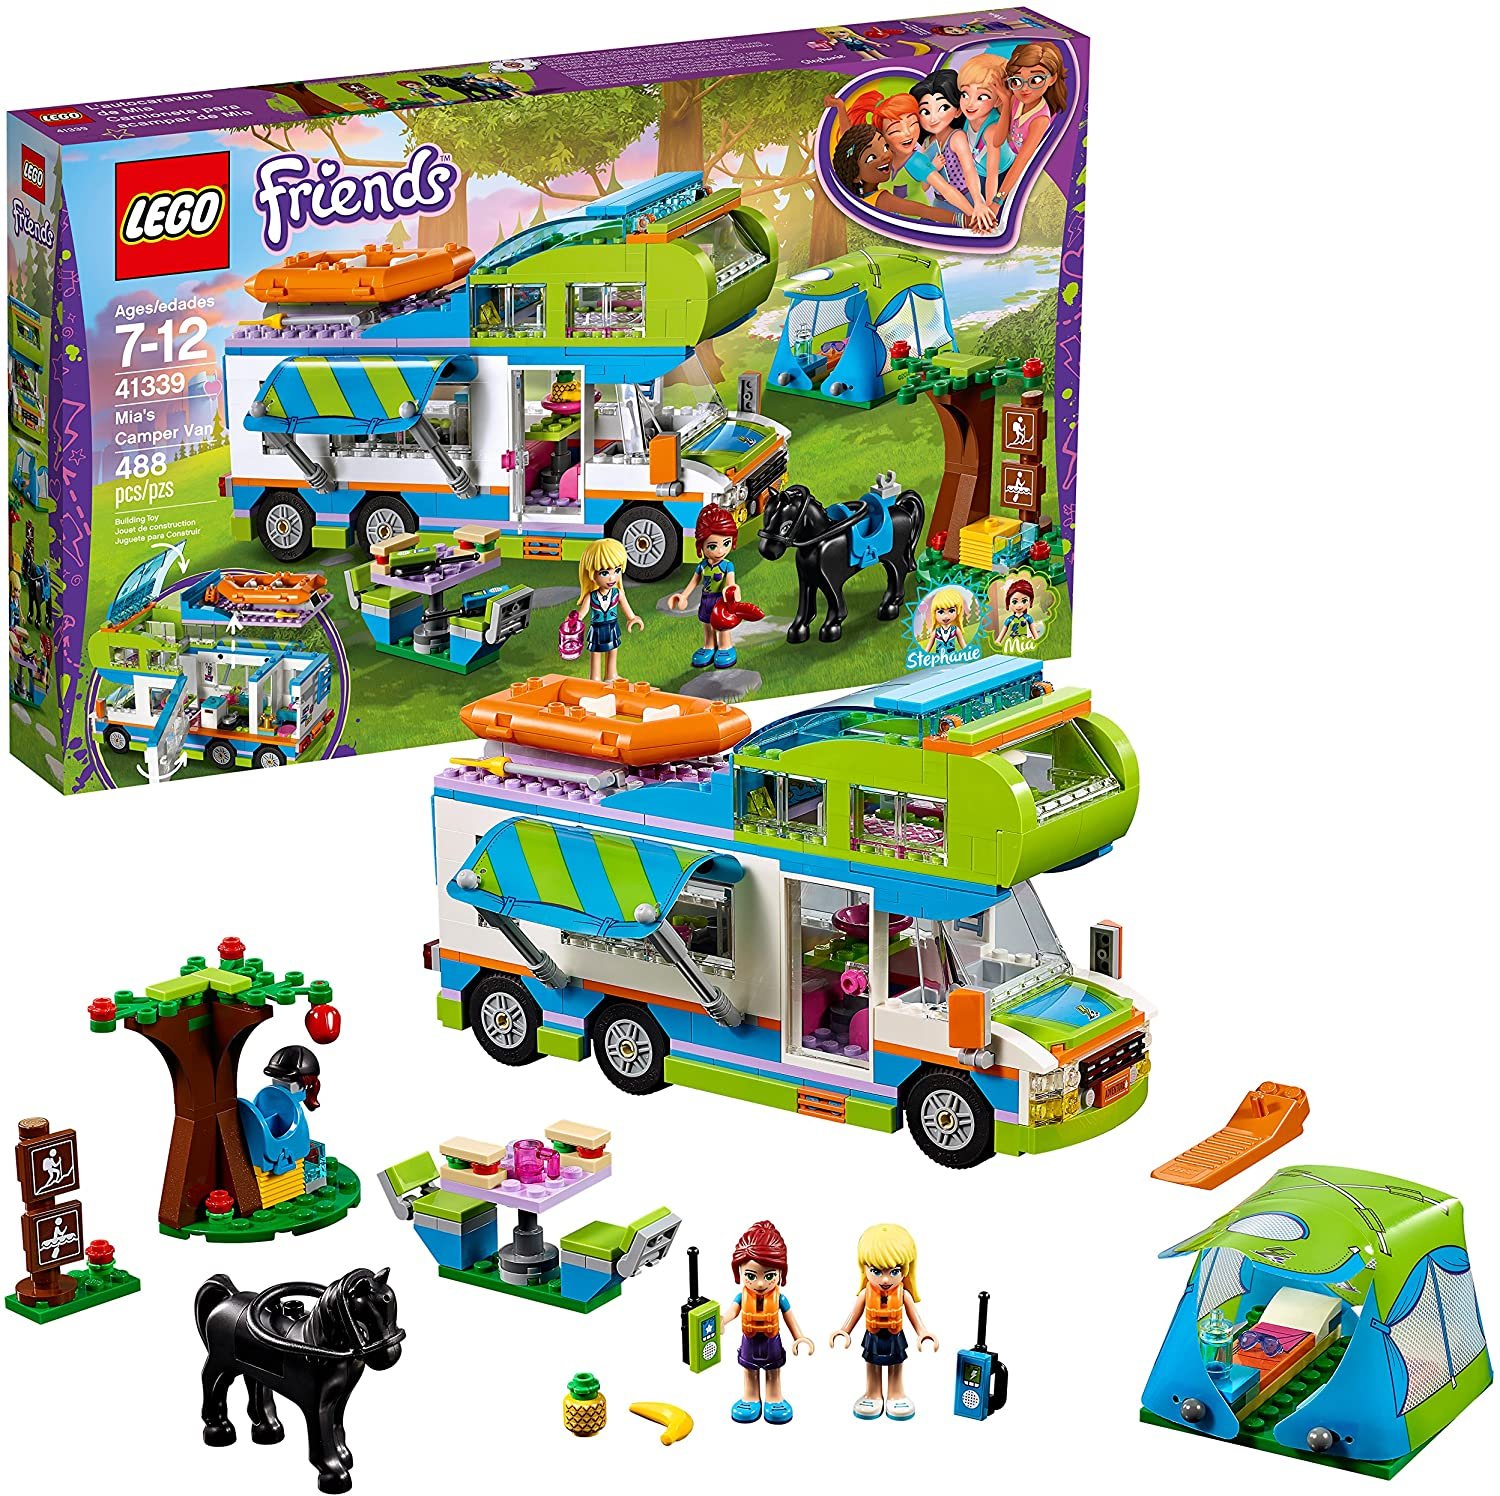 Lego Friends Mia’s Camper Van 41339 Building Set 488 Pieces